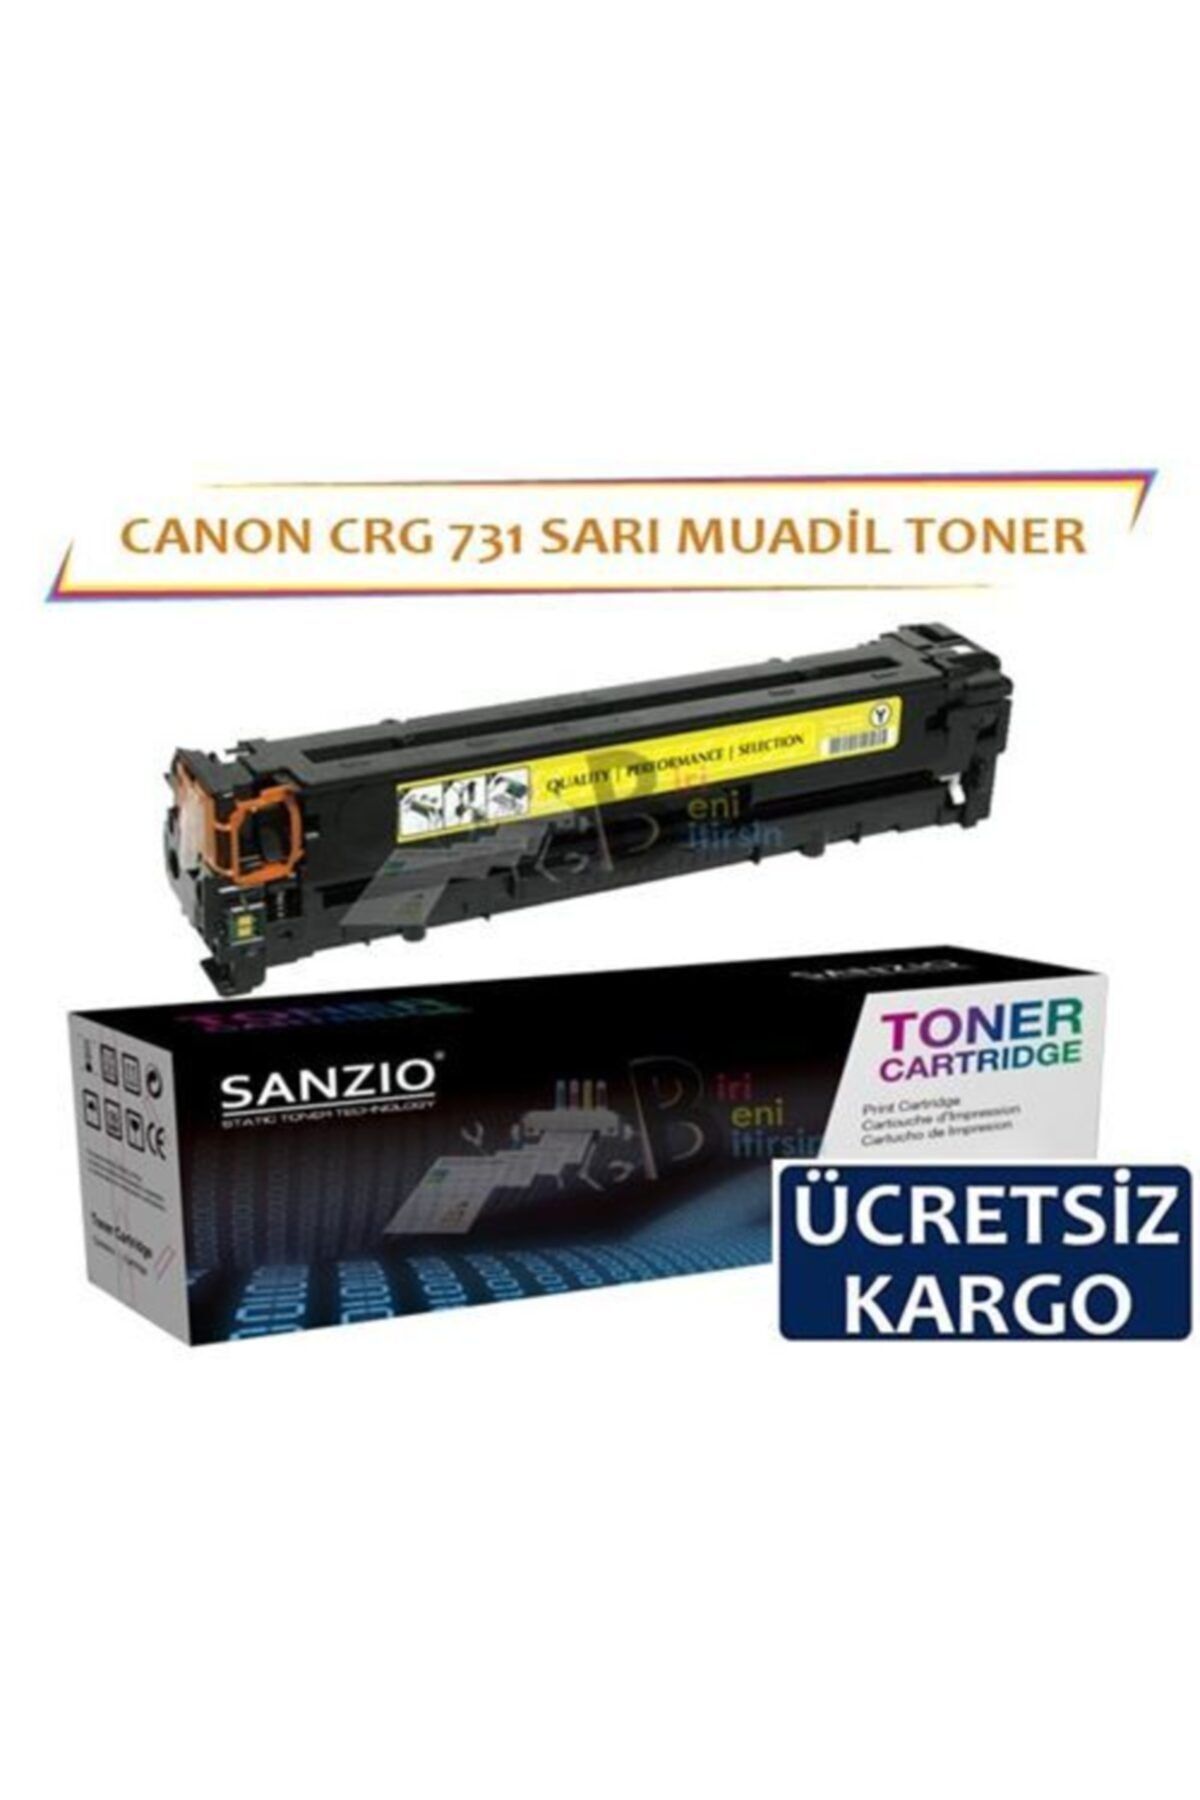 BBB Canon Crg-731 Sarı Muadil Toner Lbp7100 Mf 8280 6680